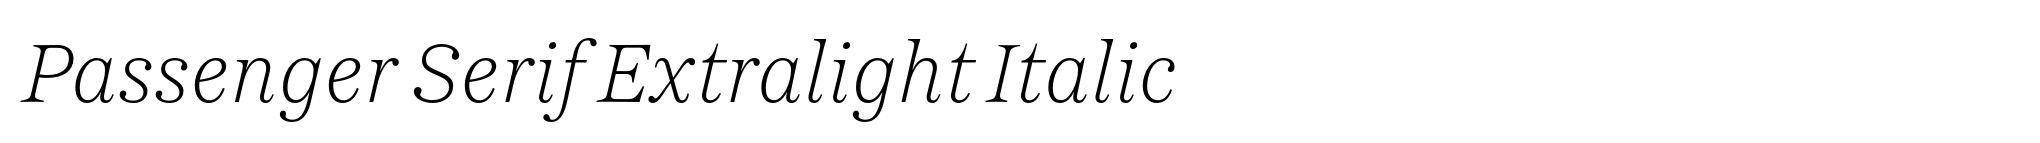 Passenger Serif Extralight Italic image